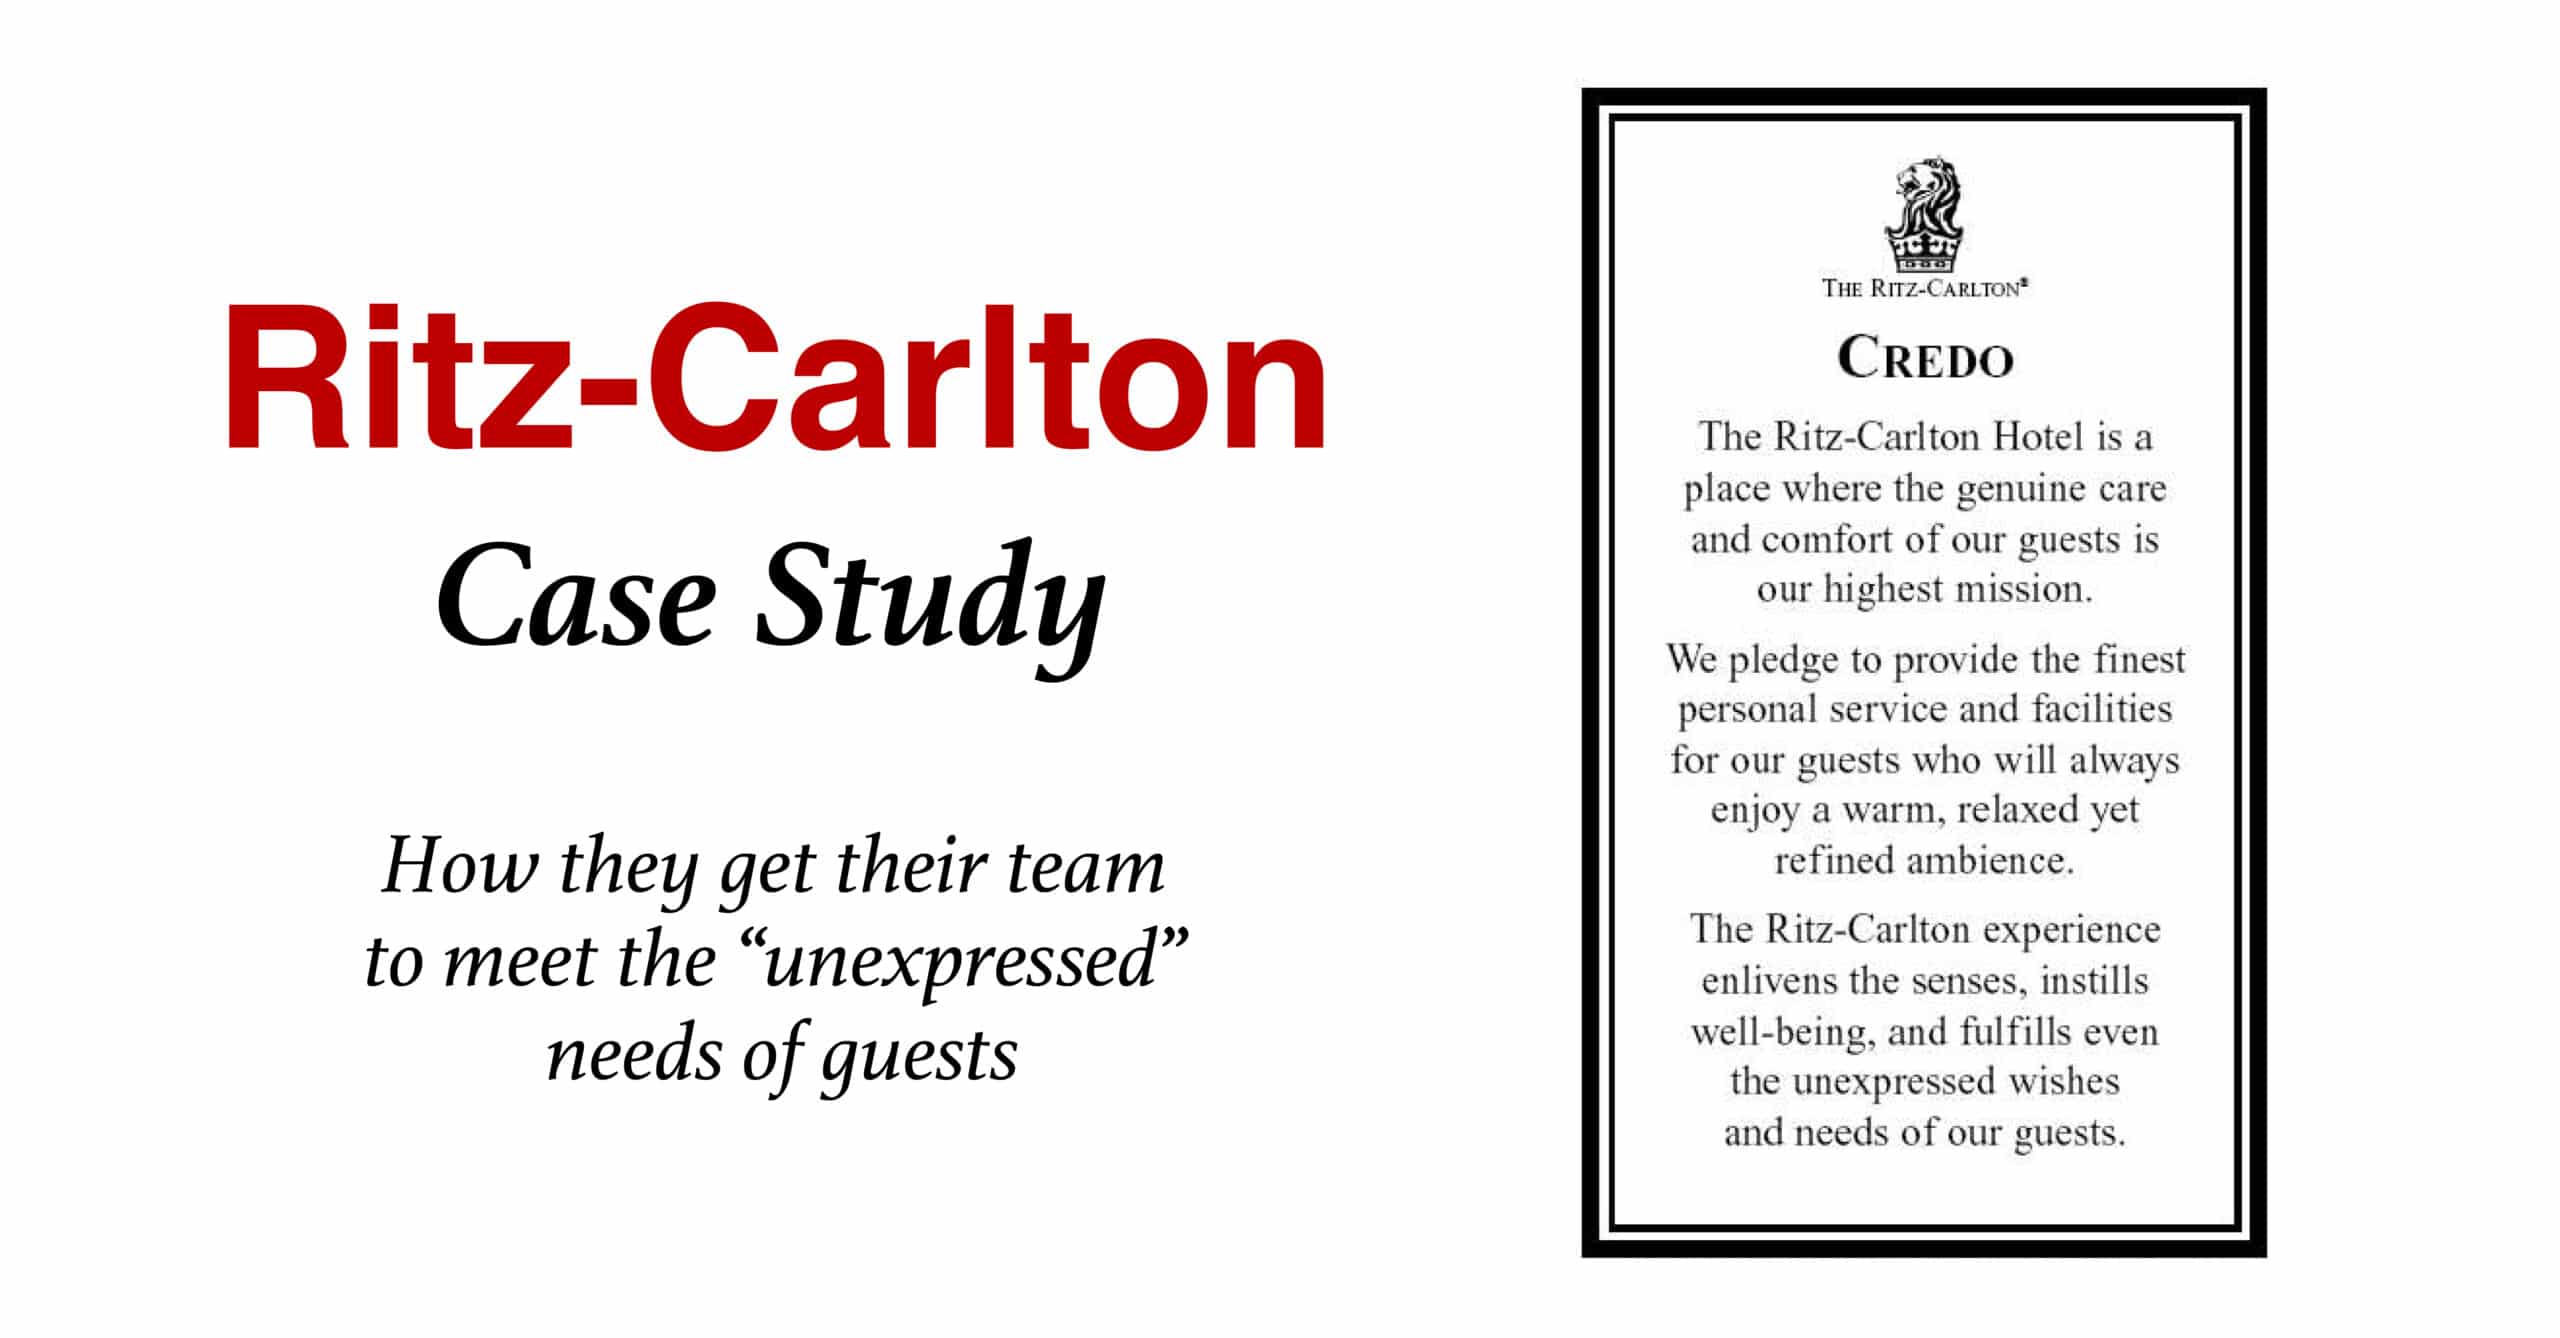 ritz carlton hotel company case analysis